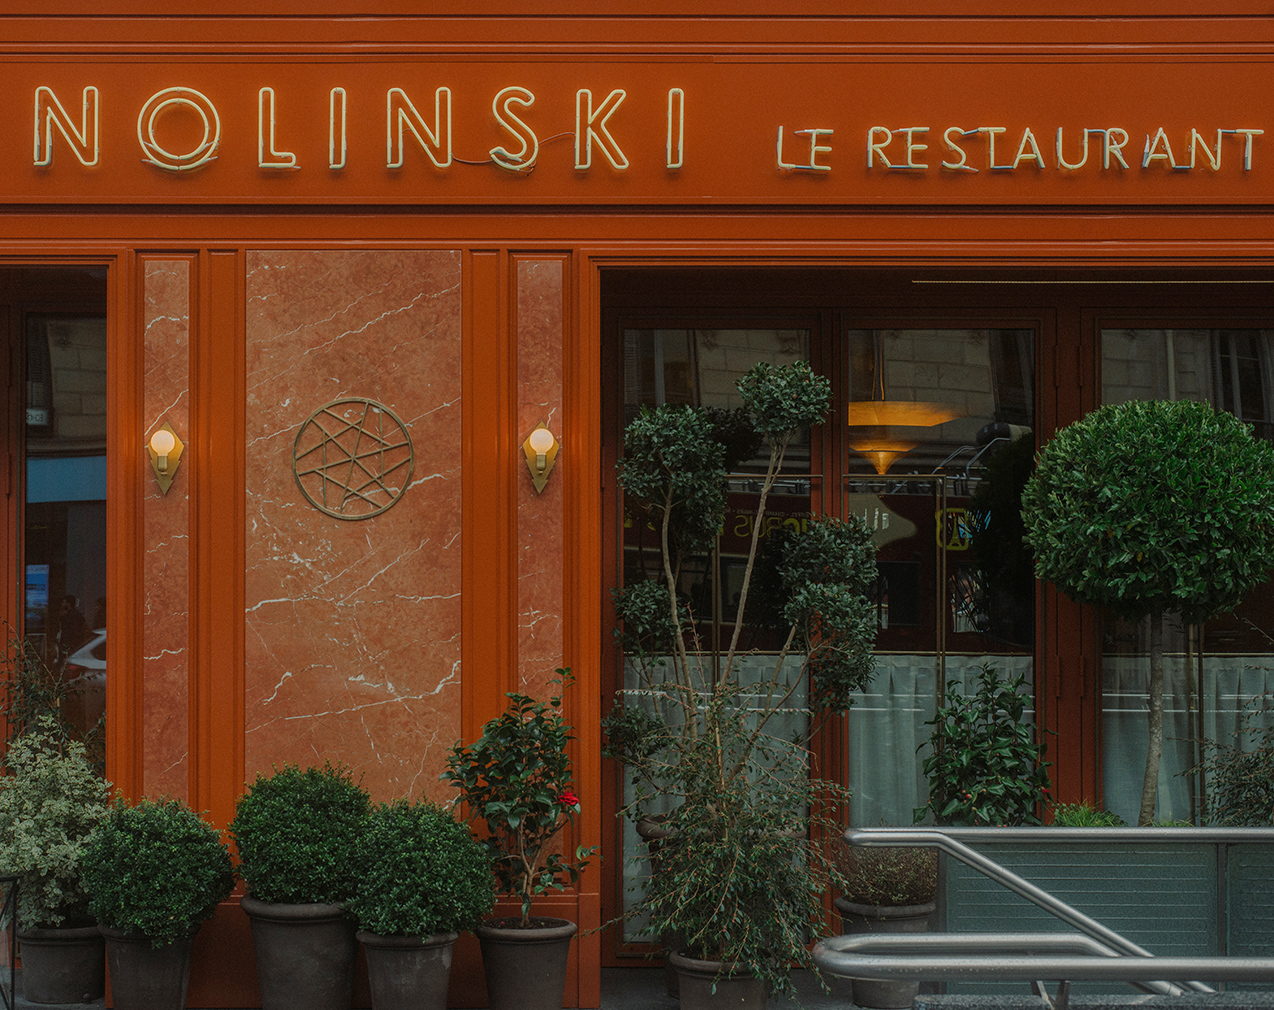 Nolinski restaurant fuses art deco and 70s styles